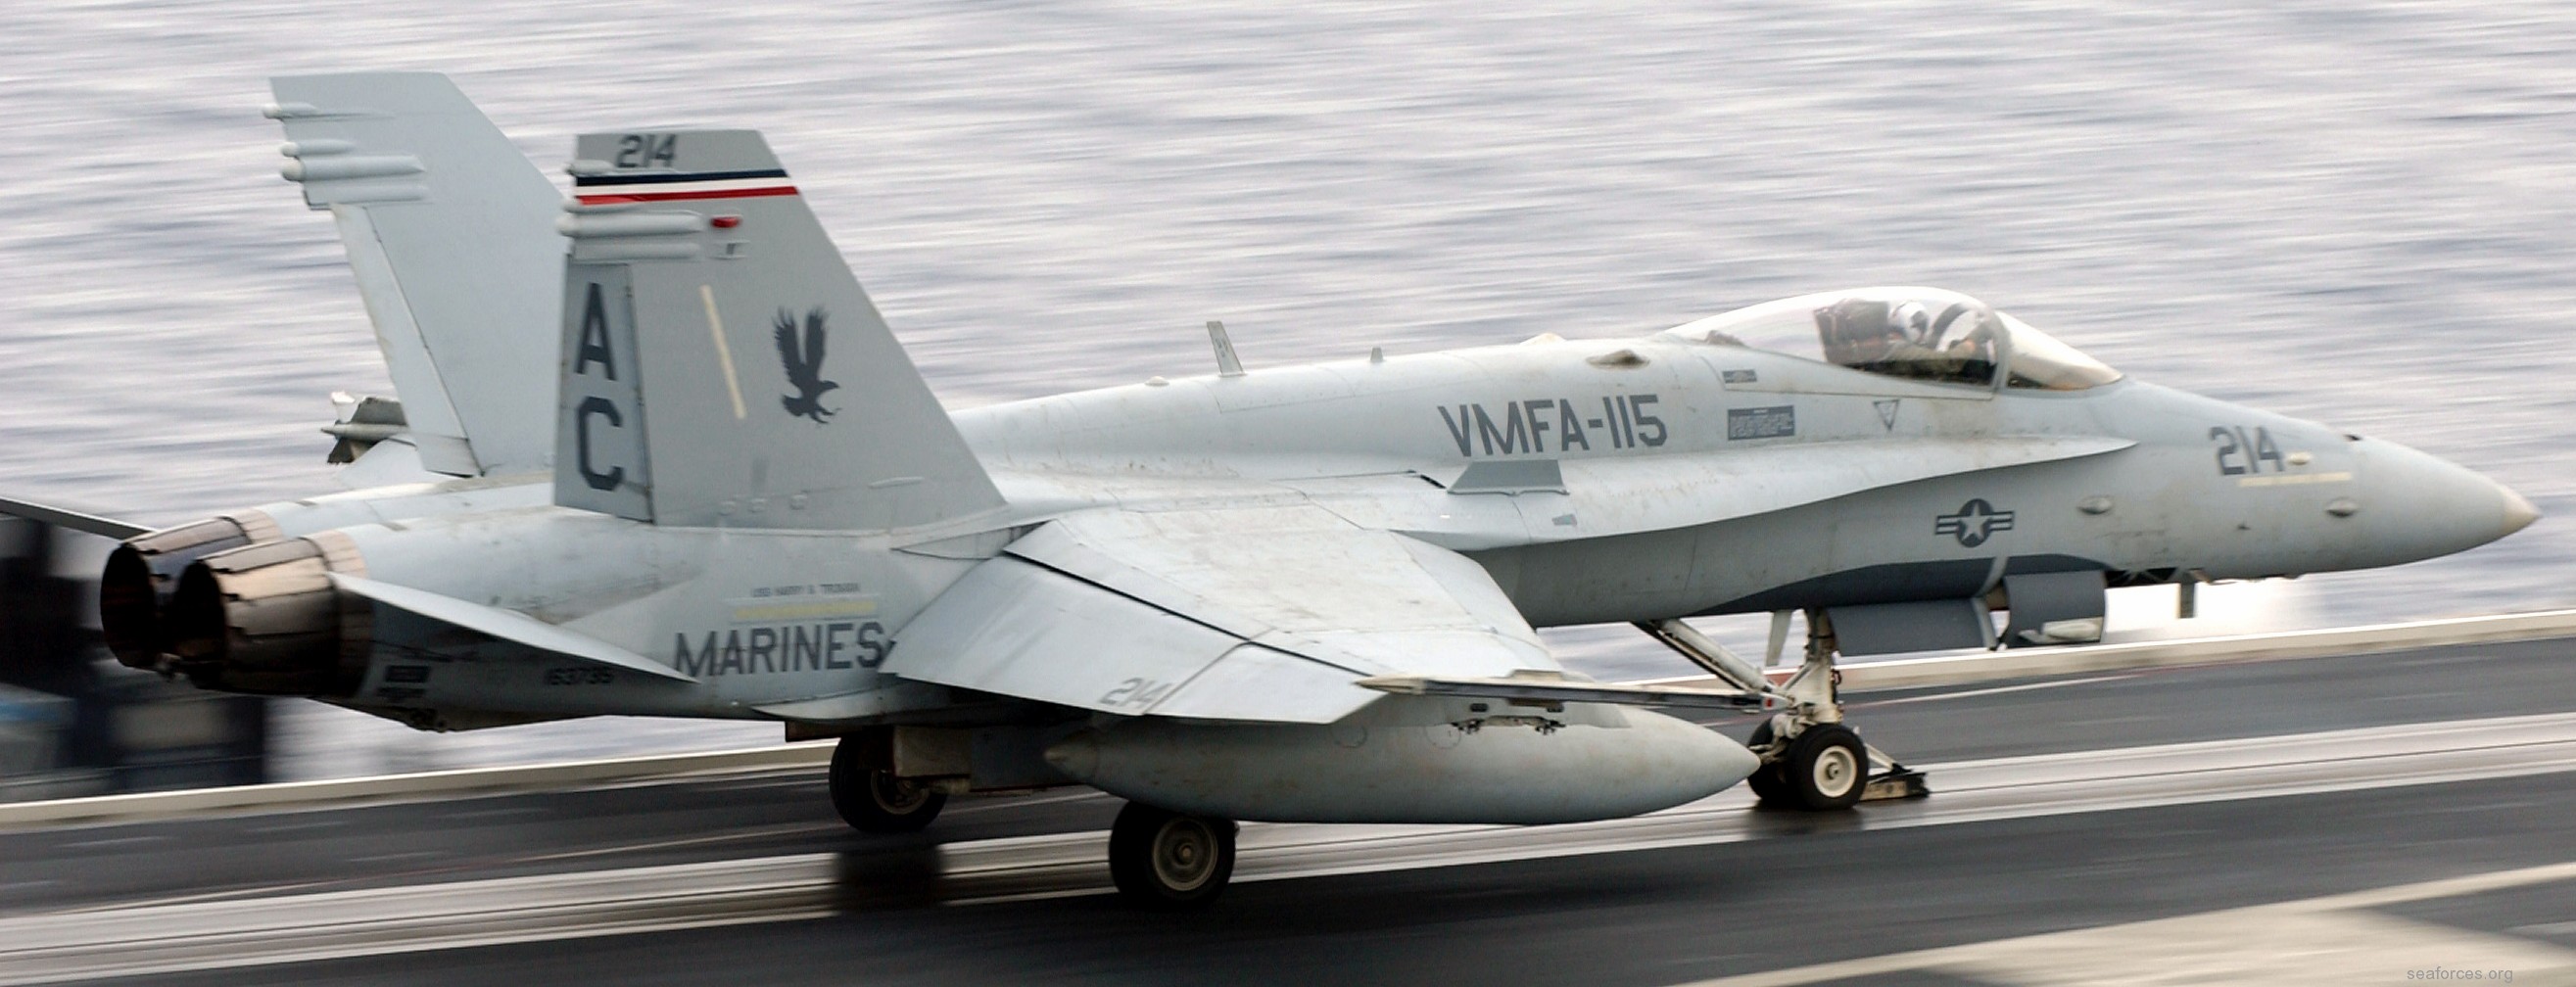 vmfa-115 silver eagles marine fighter attack squadron f/a-18a+ hornet cvw-3 uss harry s. truman cvn-75 15